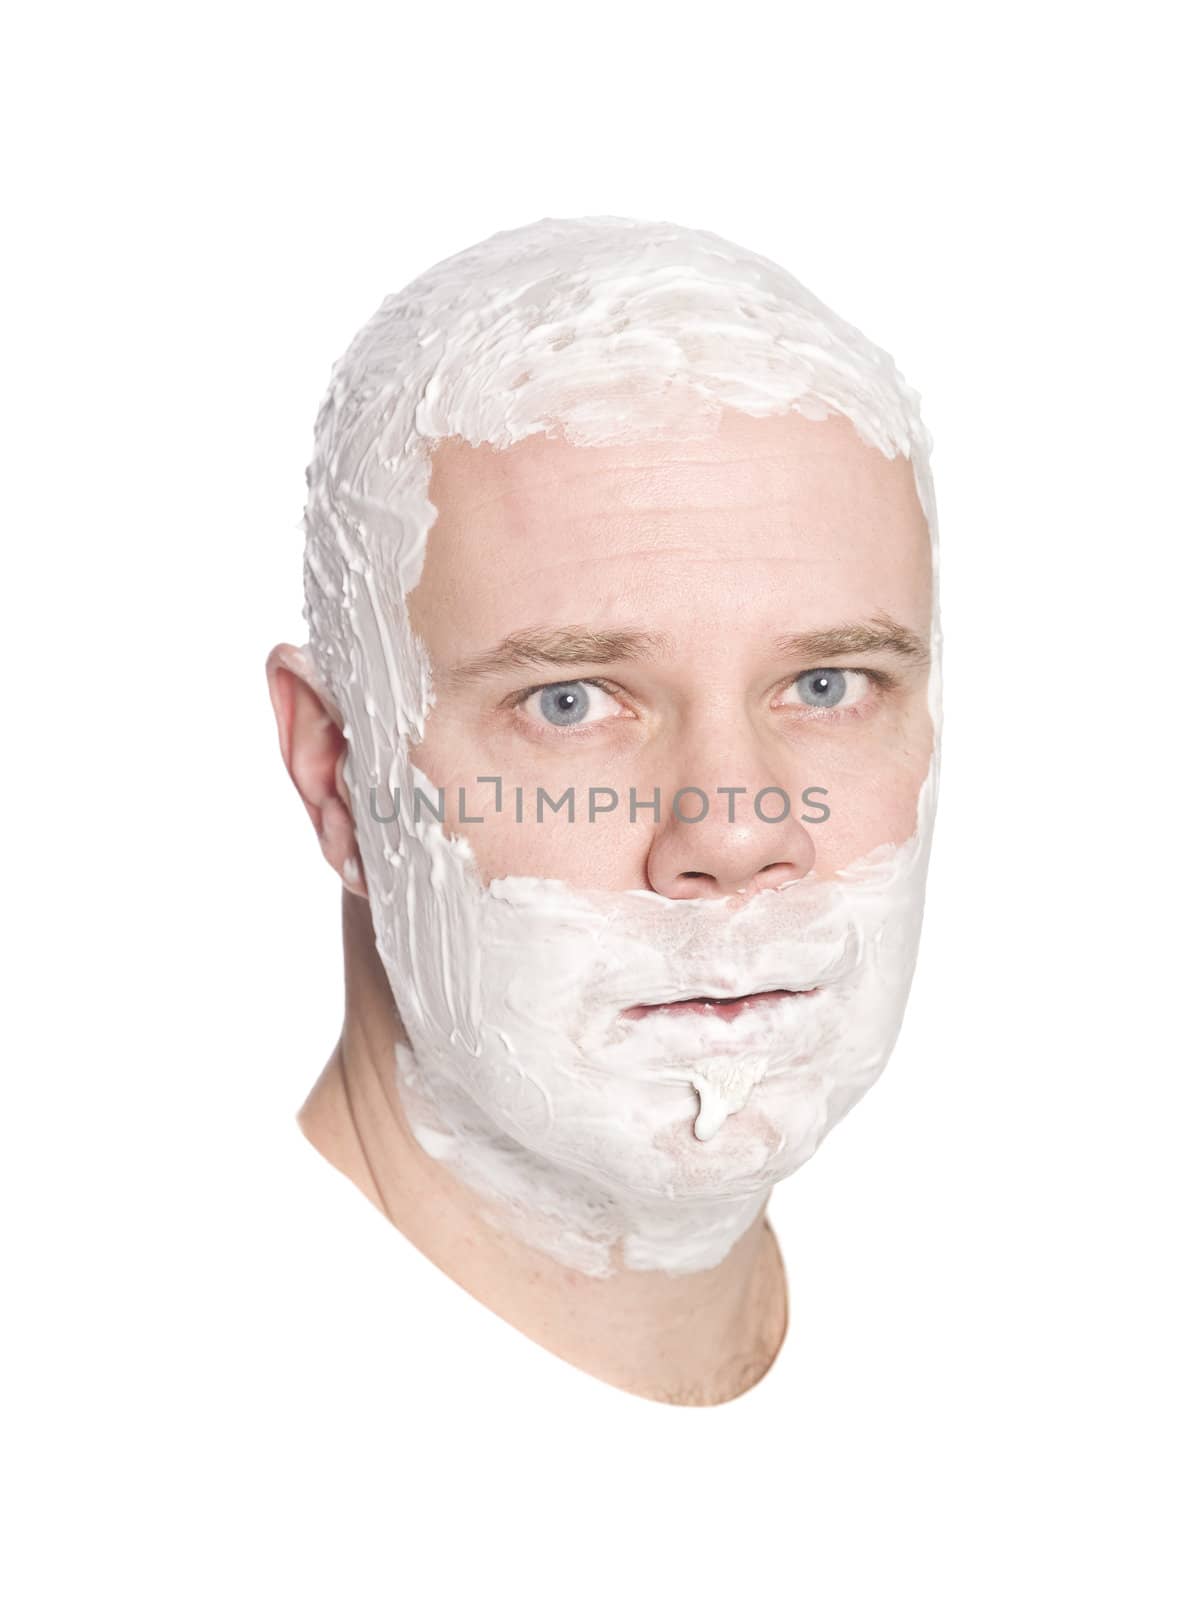 Man shaving his head by gemenacom